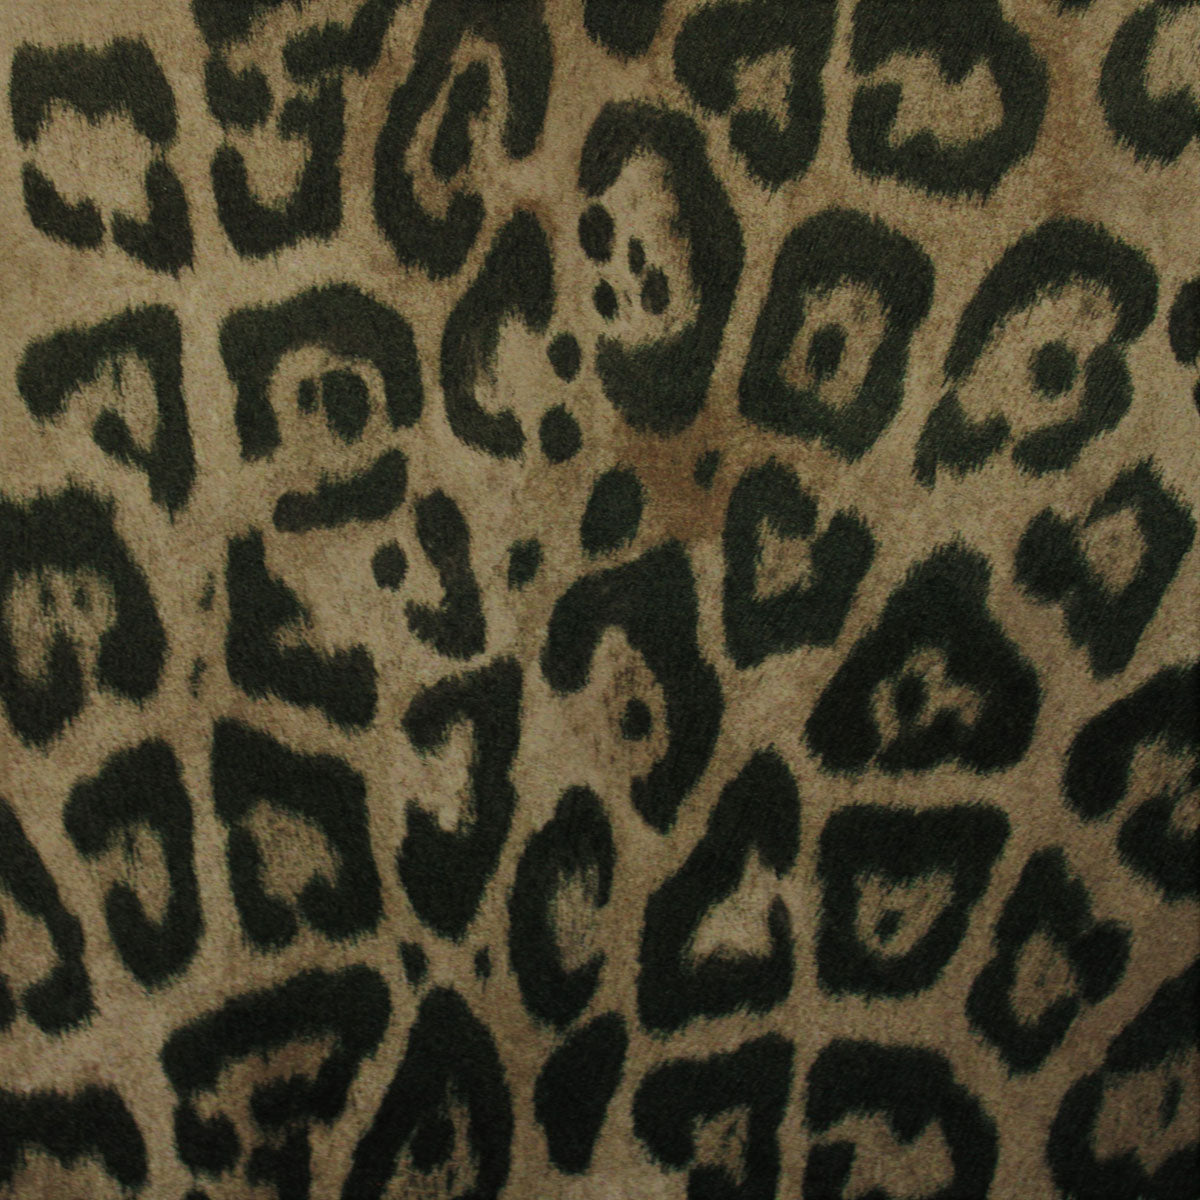 100,000 Leopard print Vector Images